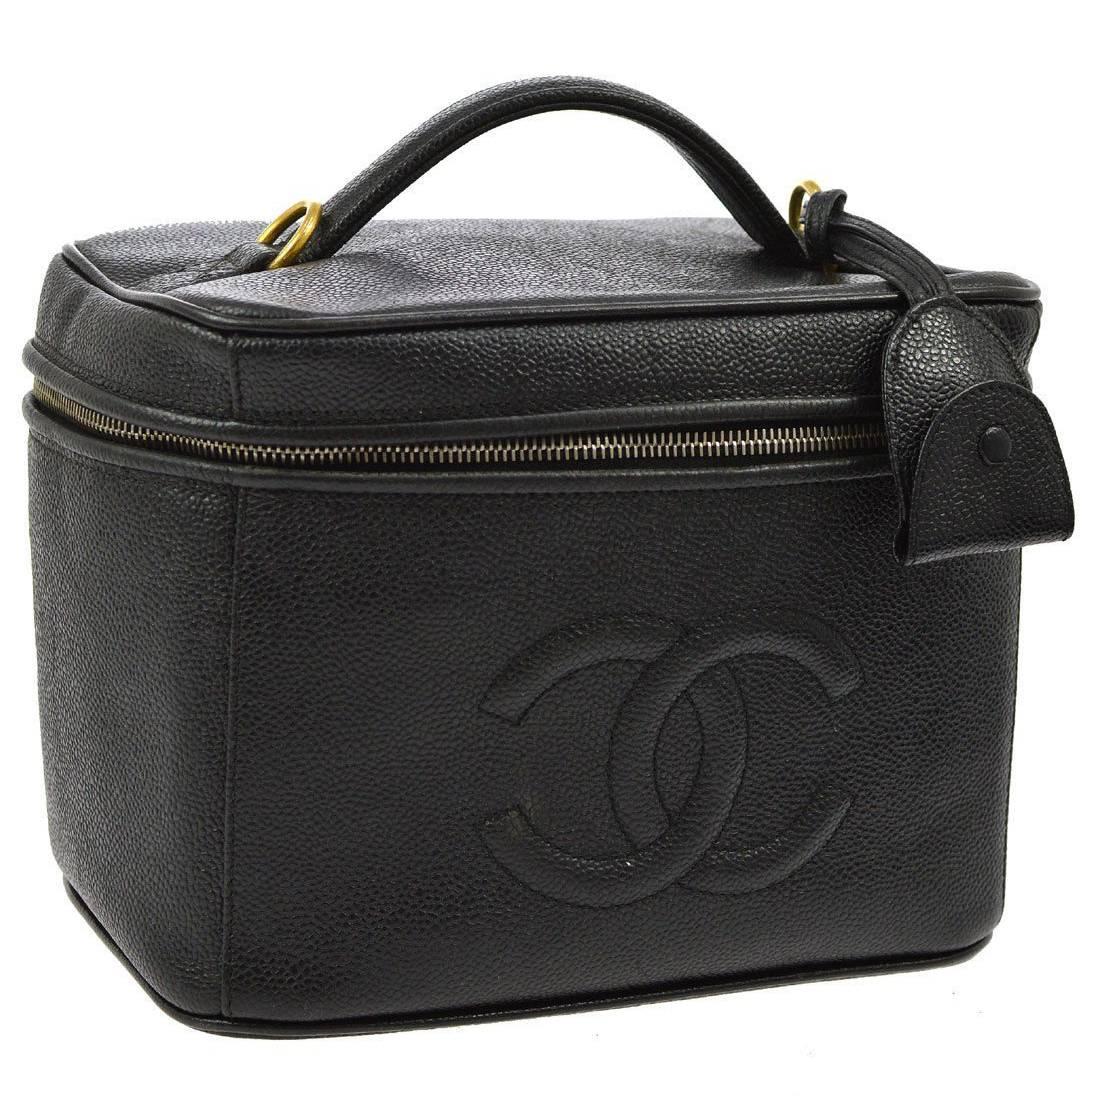 Chanel Black Caviar Top Handle Satchel Carryall Beauty Vanity Travel Case Bag